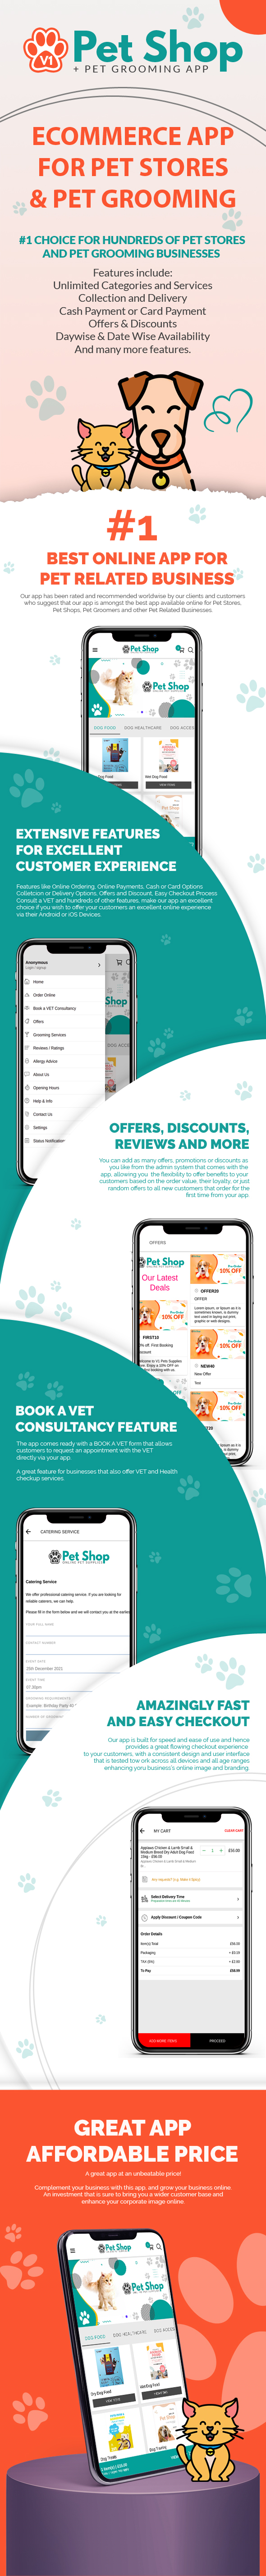 Pet Shop eCommerce Store Online Pet Food Supplies Grooming Services App - 3